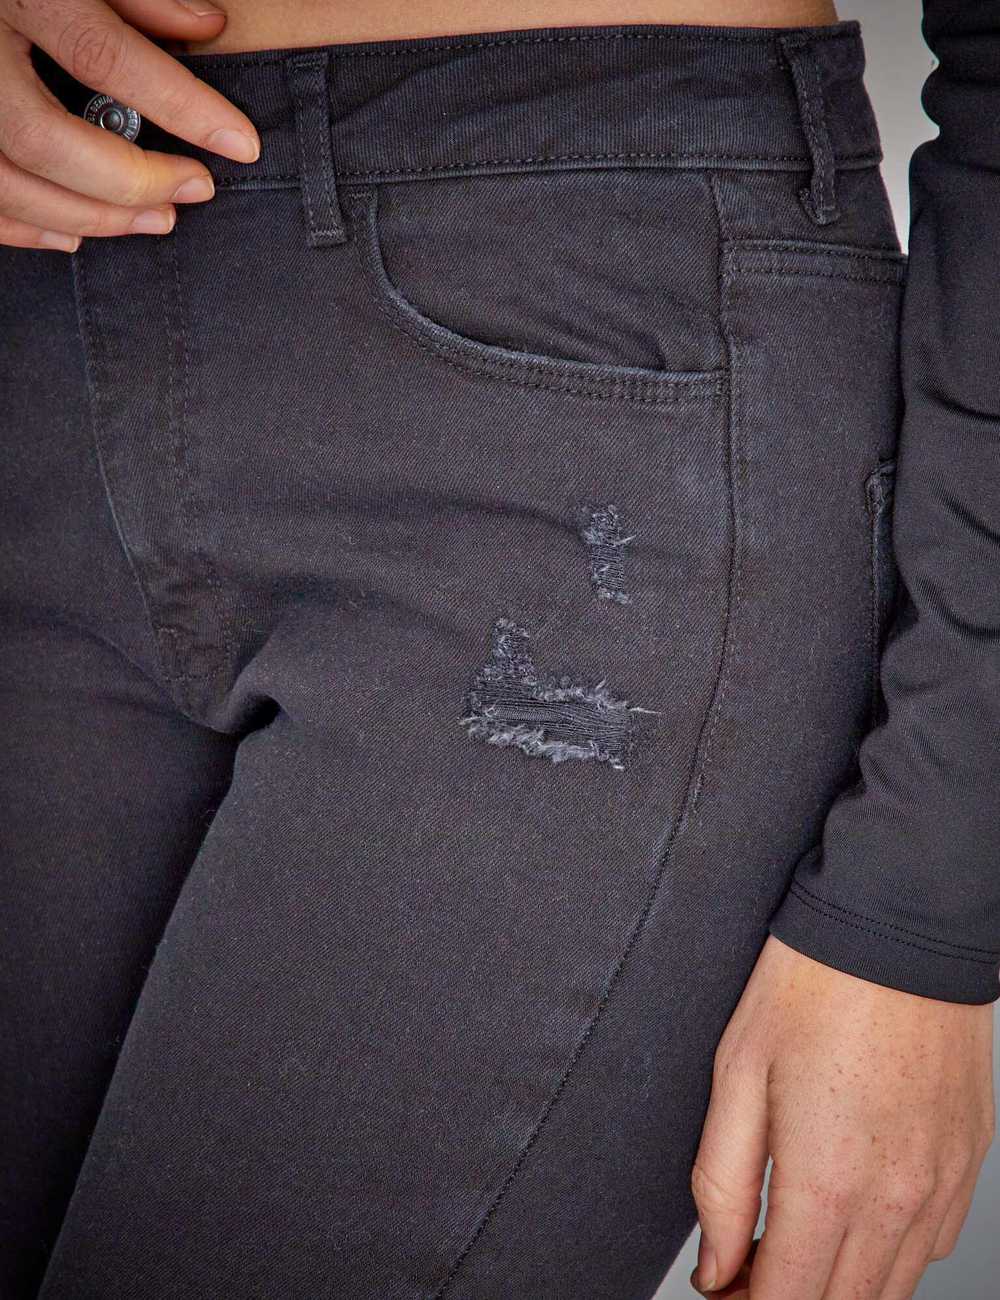 ShyCloset Pocket Jeggings Jeans Leggings Pants - Women Bottom Casual Comfy  Slim Fit Denim Skinny Stretch Plus Size, Ankle - Black, One size price in  UAE,  UAE